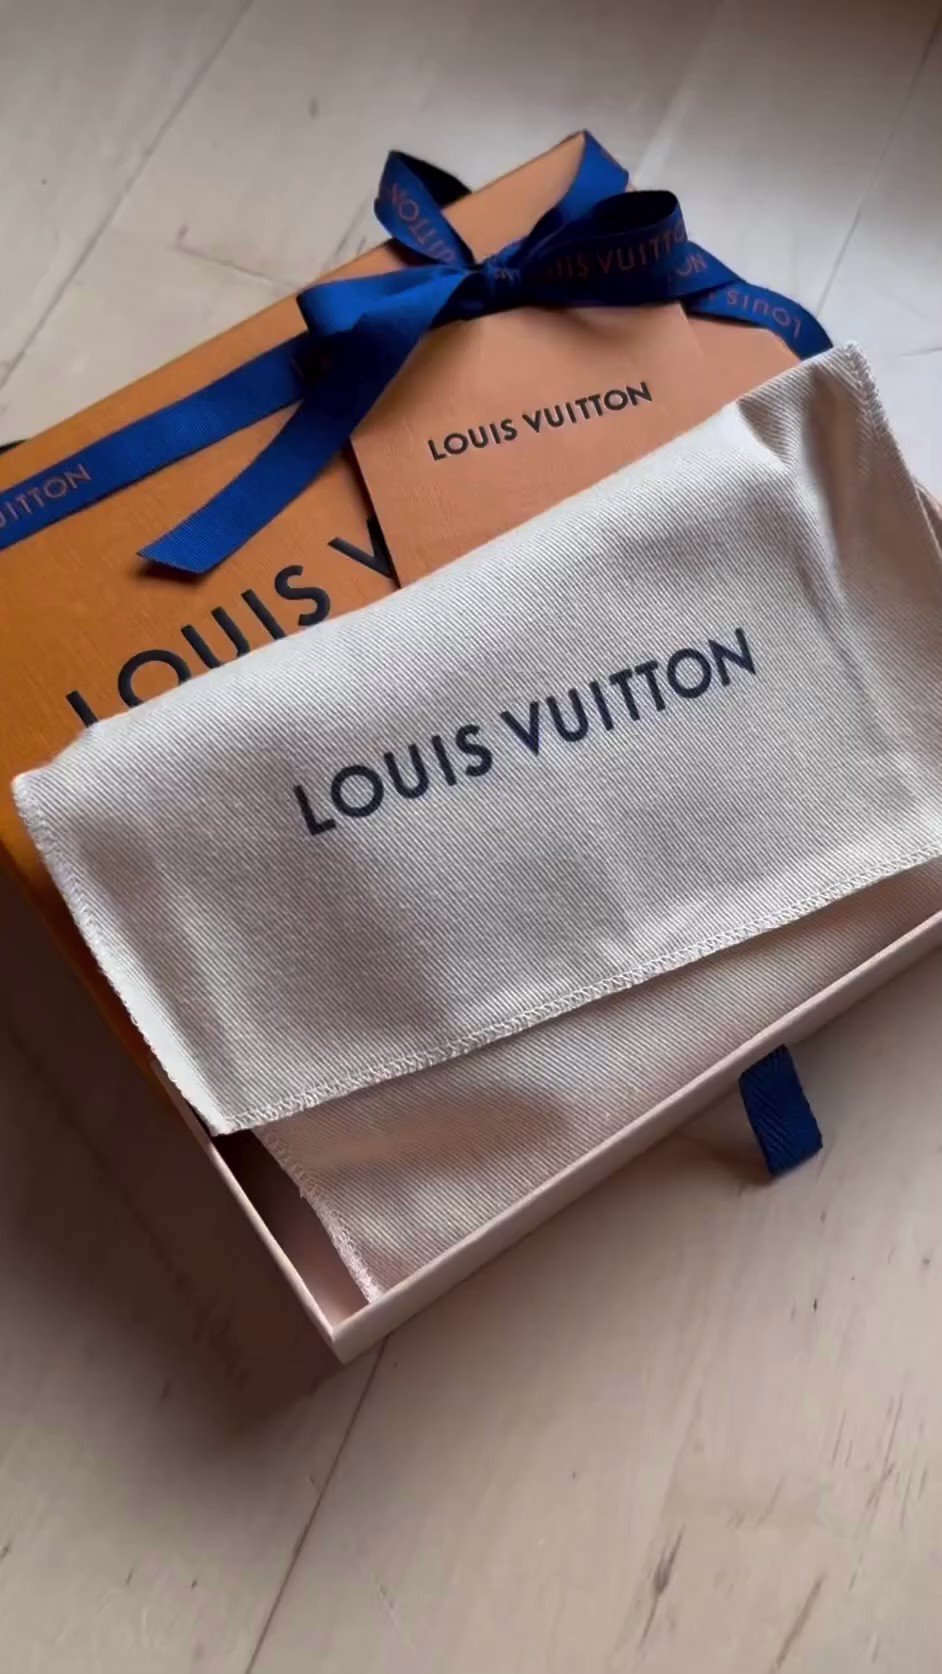 highsnobiety on X: Louis Vuitton chocolate bar key ring via @/empho.lv   / X